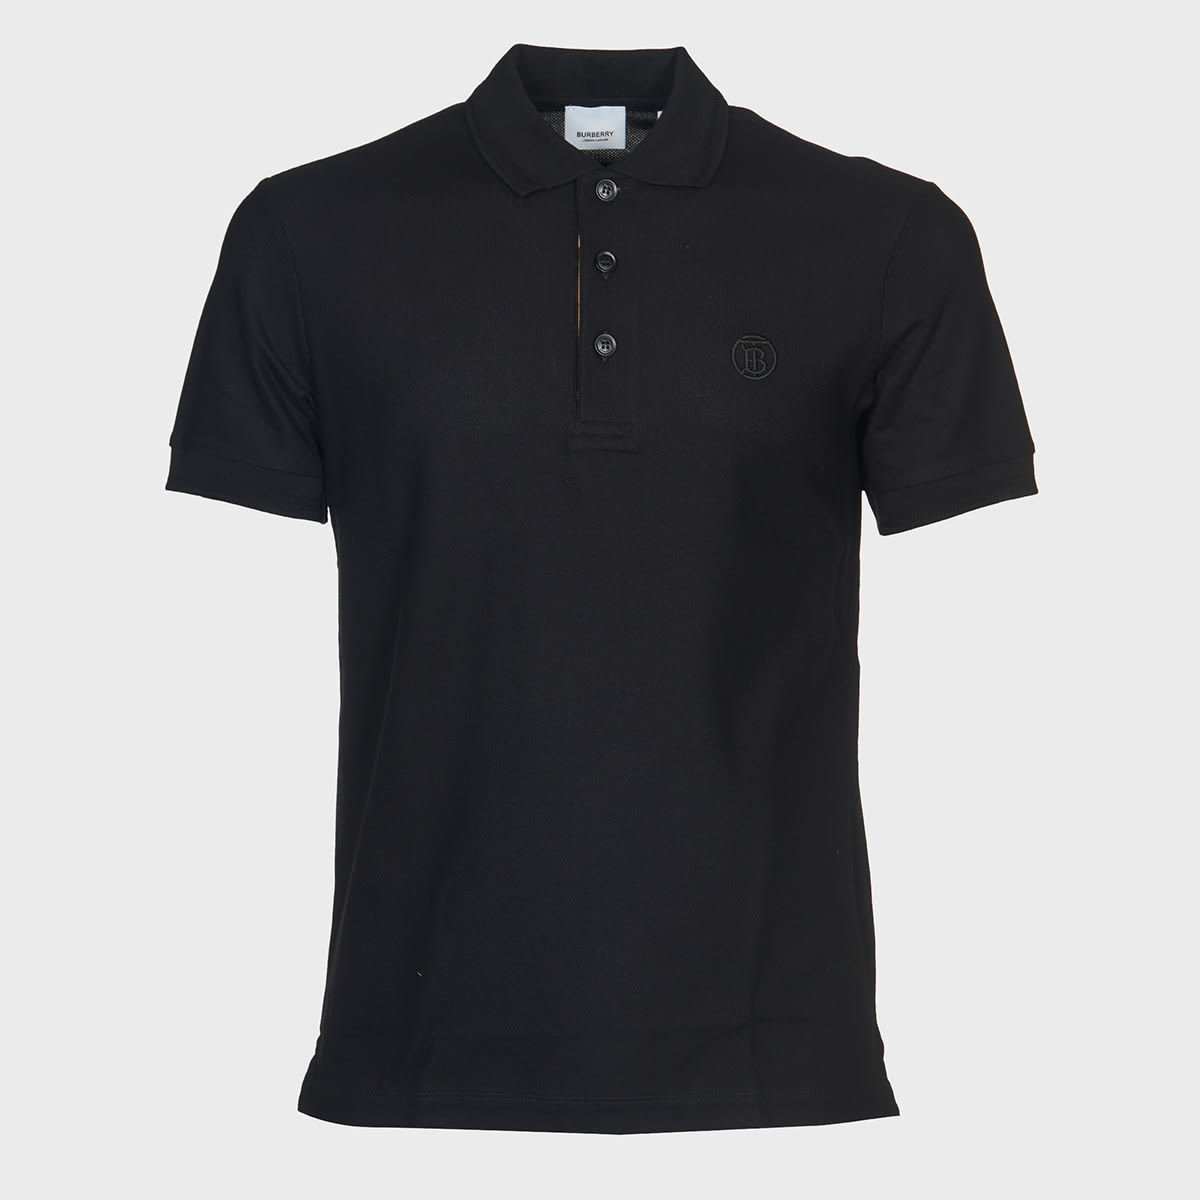 Burberry Black Cotton Polo Shirt